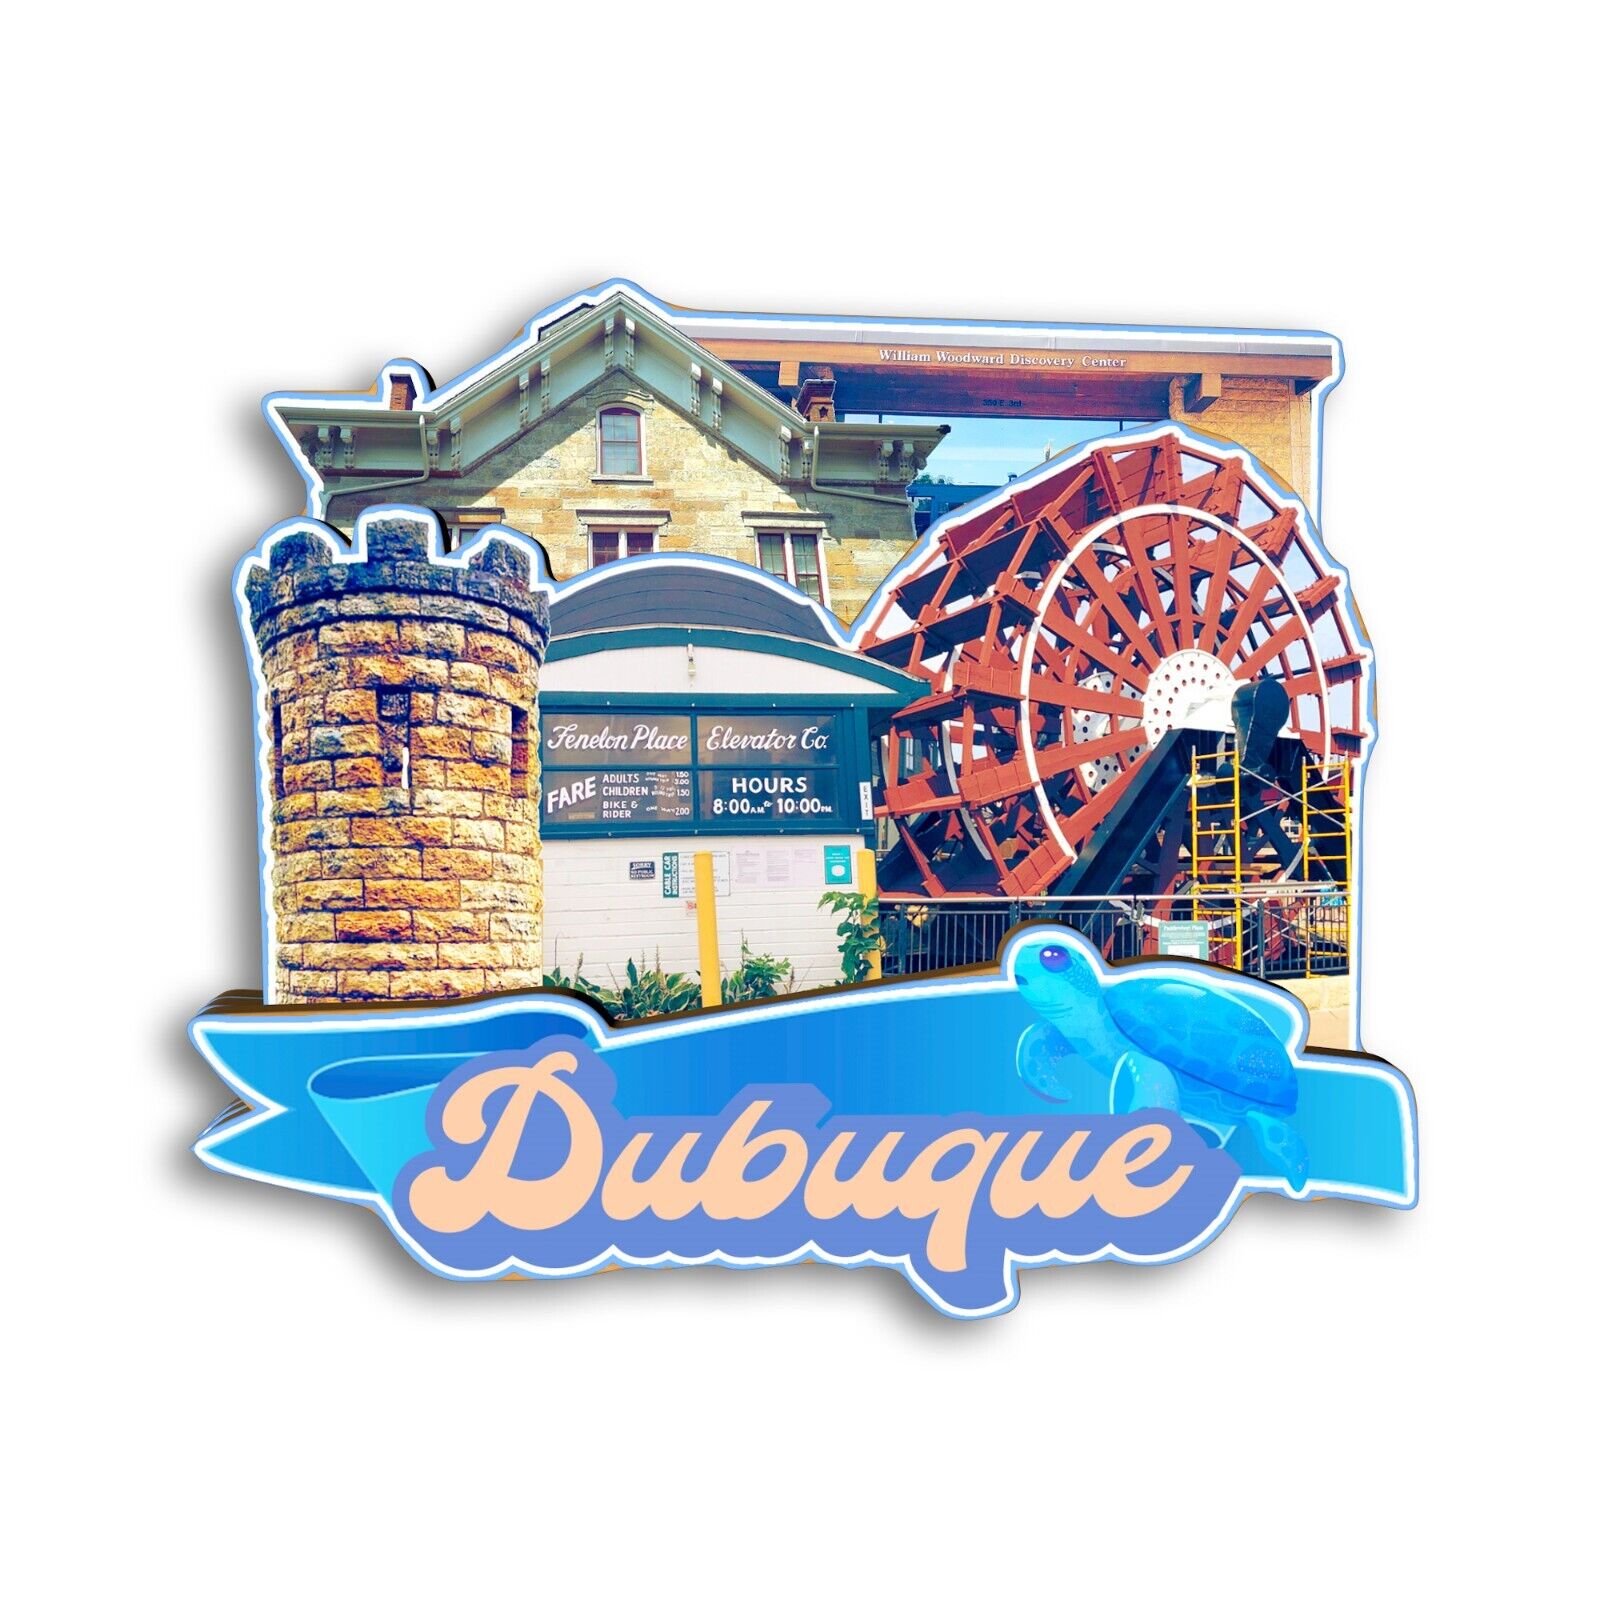 Dubuque Iowa USA Refrigerator magnet 3D travel souvenirs wood craft